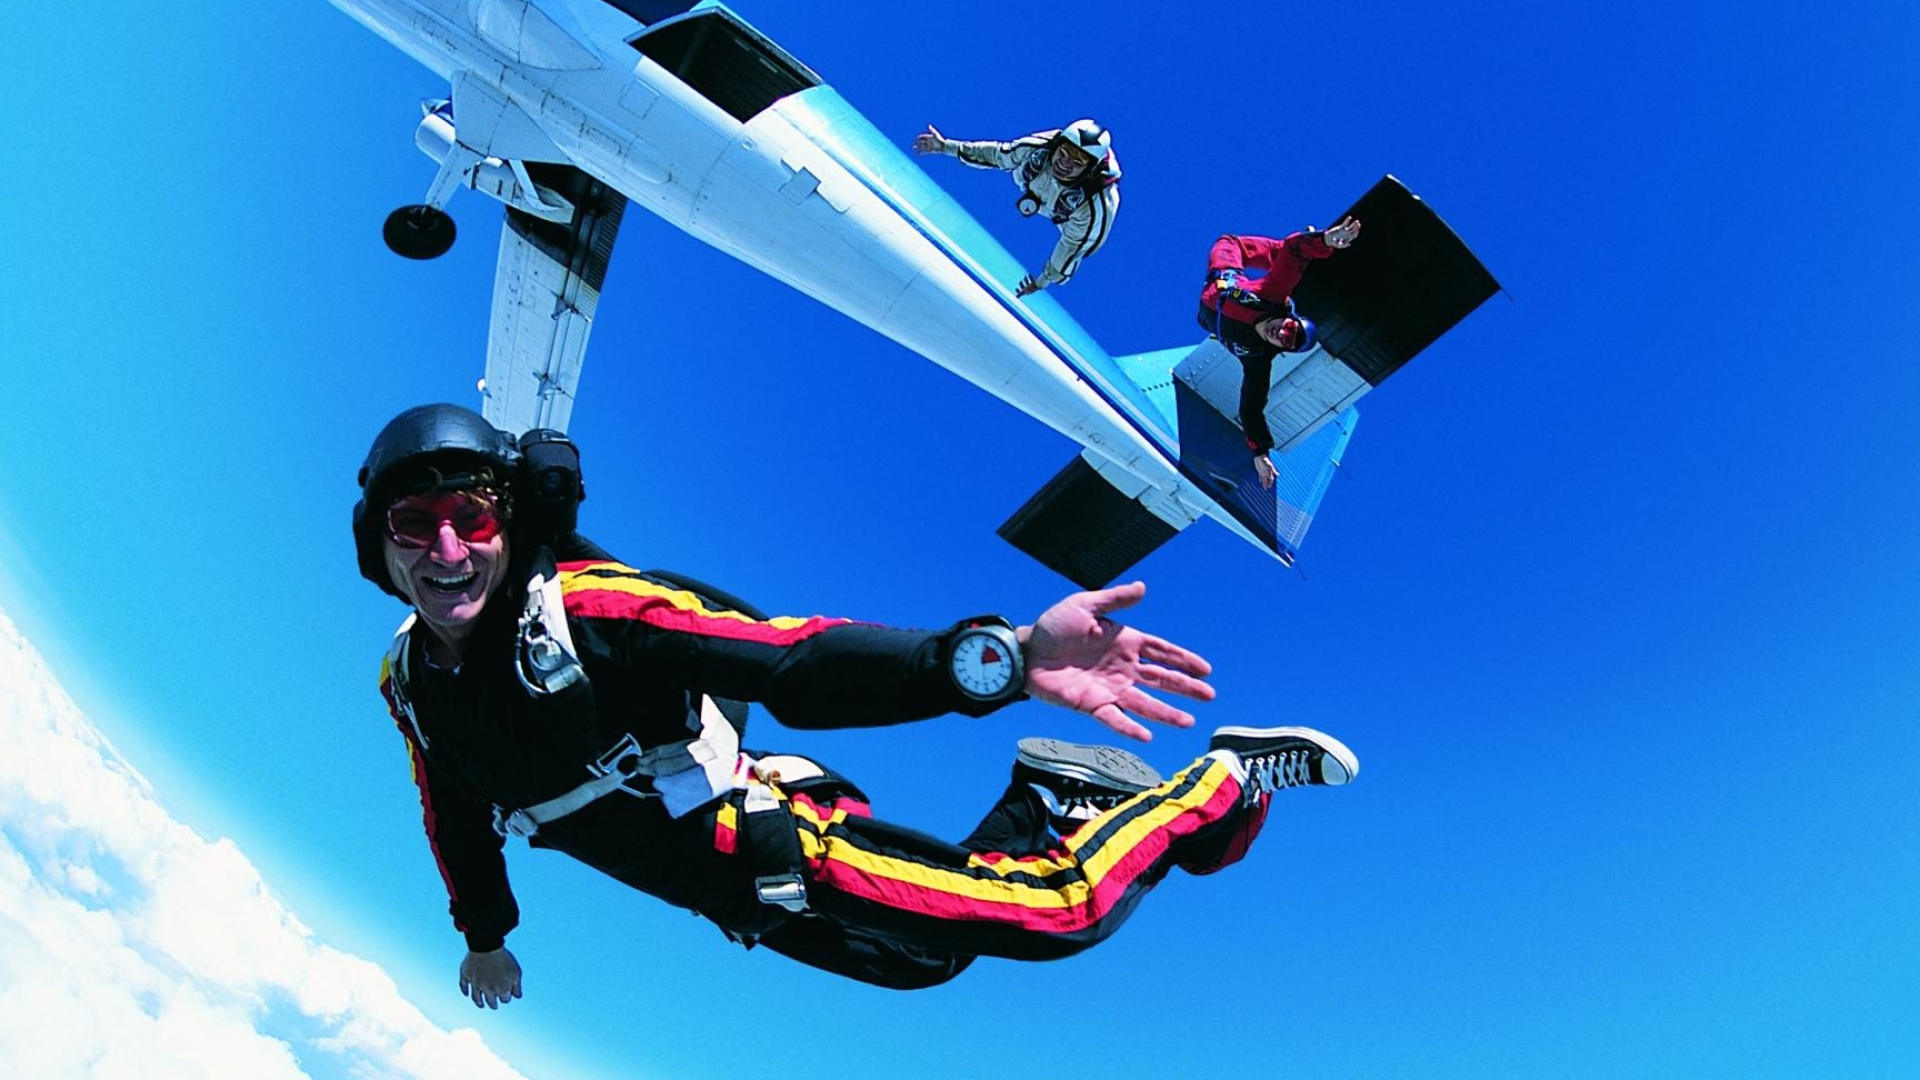 Parachuting: Conducting a free-fall jump from a parachuting aircraft, Group air sport. 1920x1080 Full HD Wallpaper.